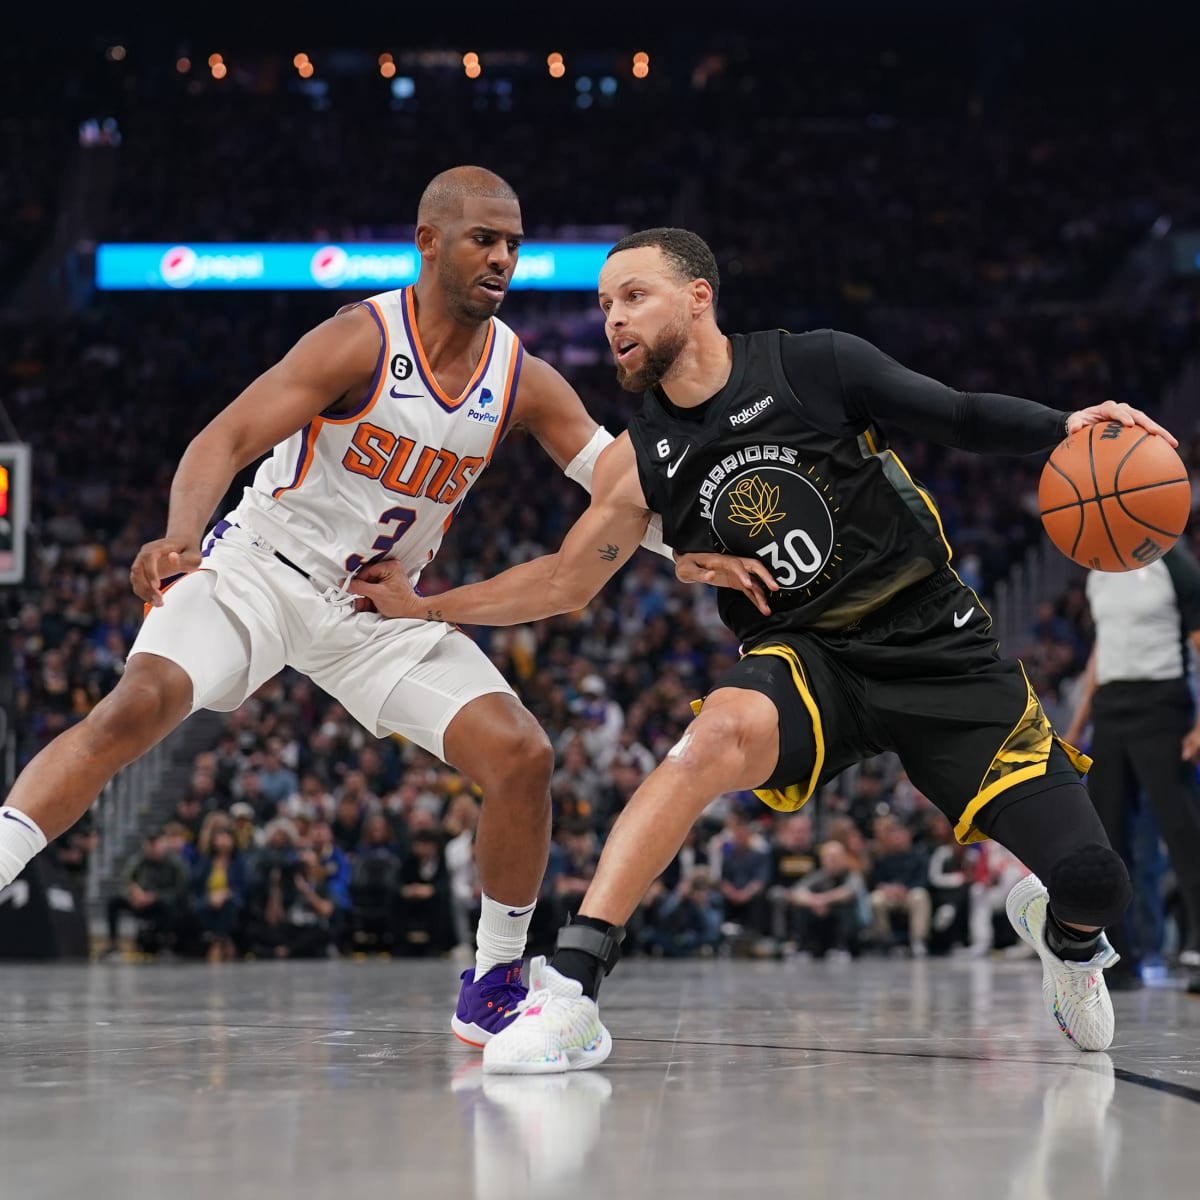 LeBron James blocks Stephen Curry and trash talks him 